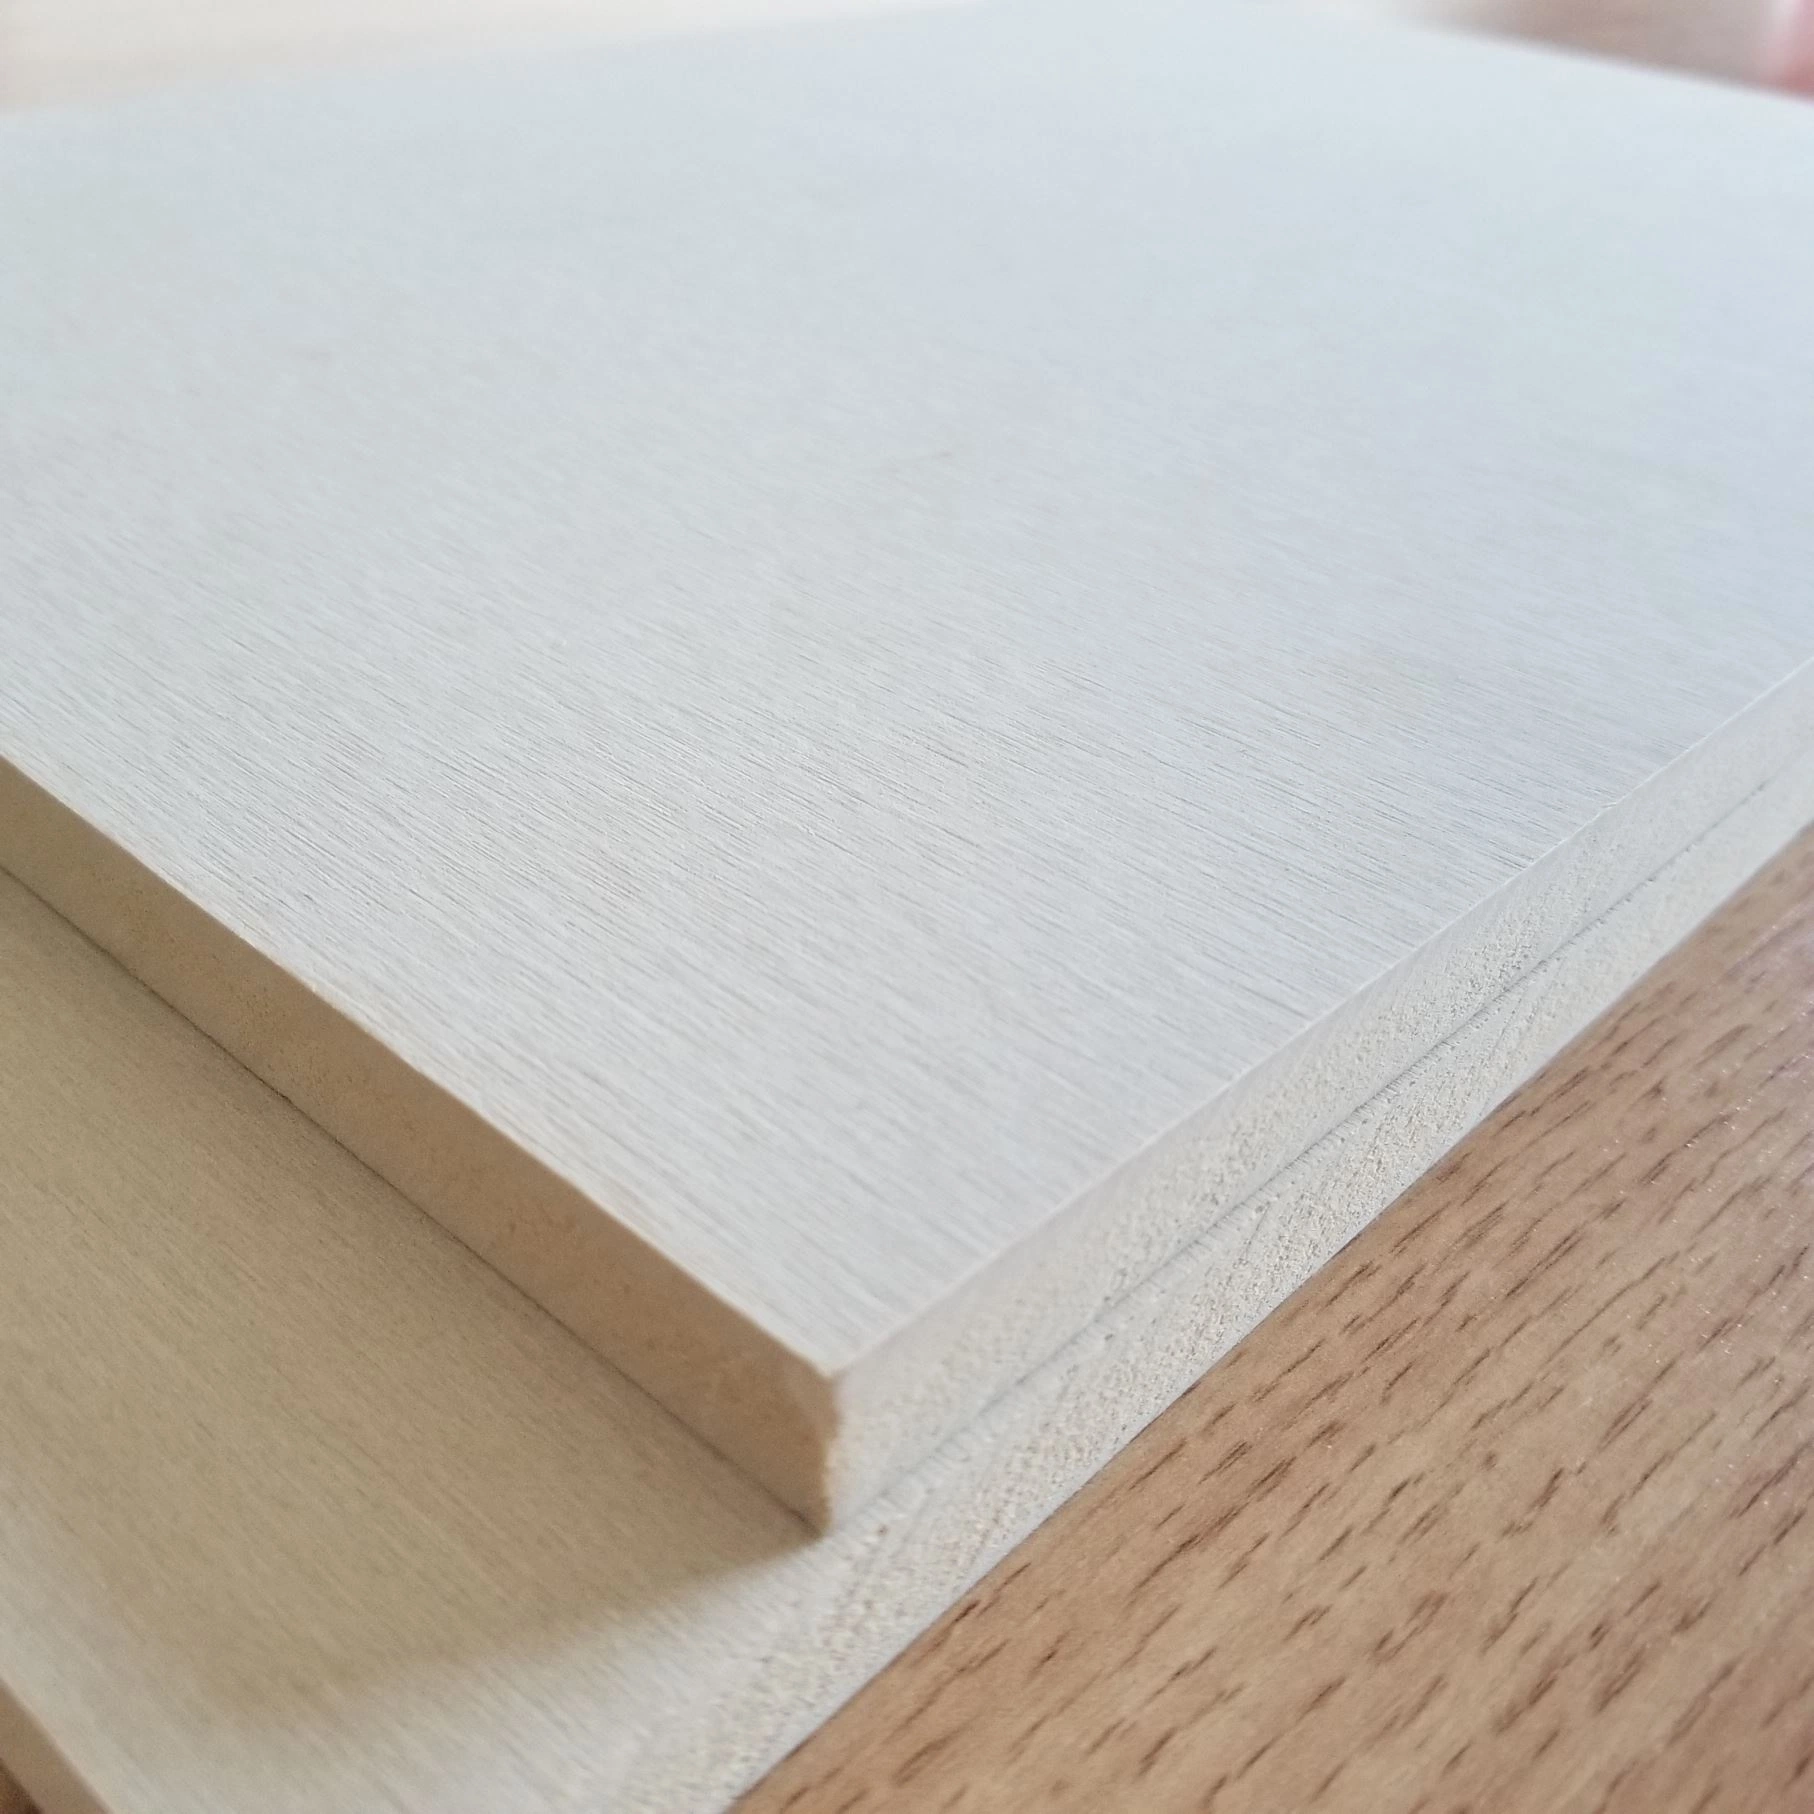 China Manufacturer PVC Wood Plastic Sheet WPC Foam Board